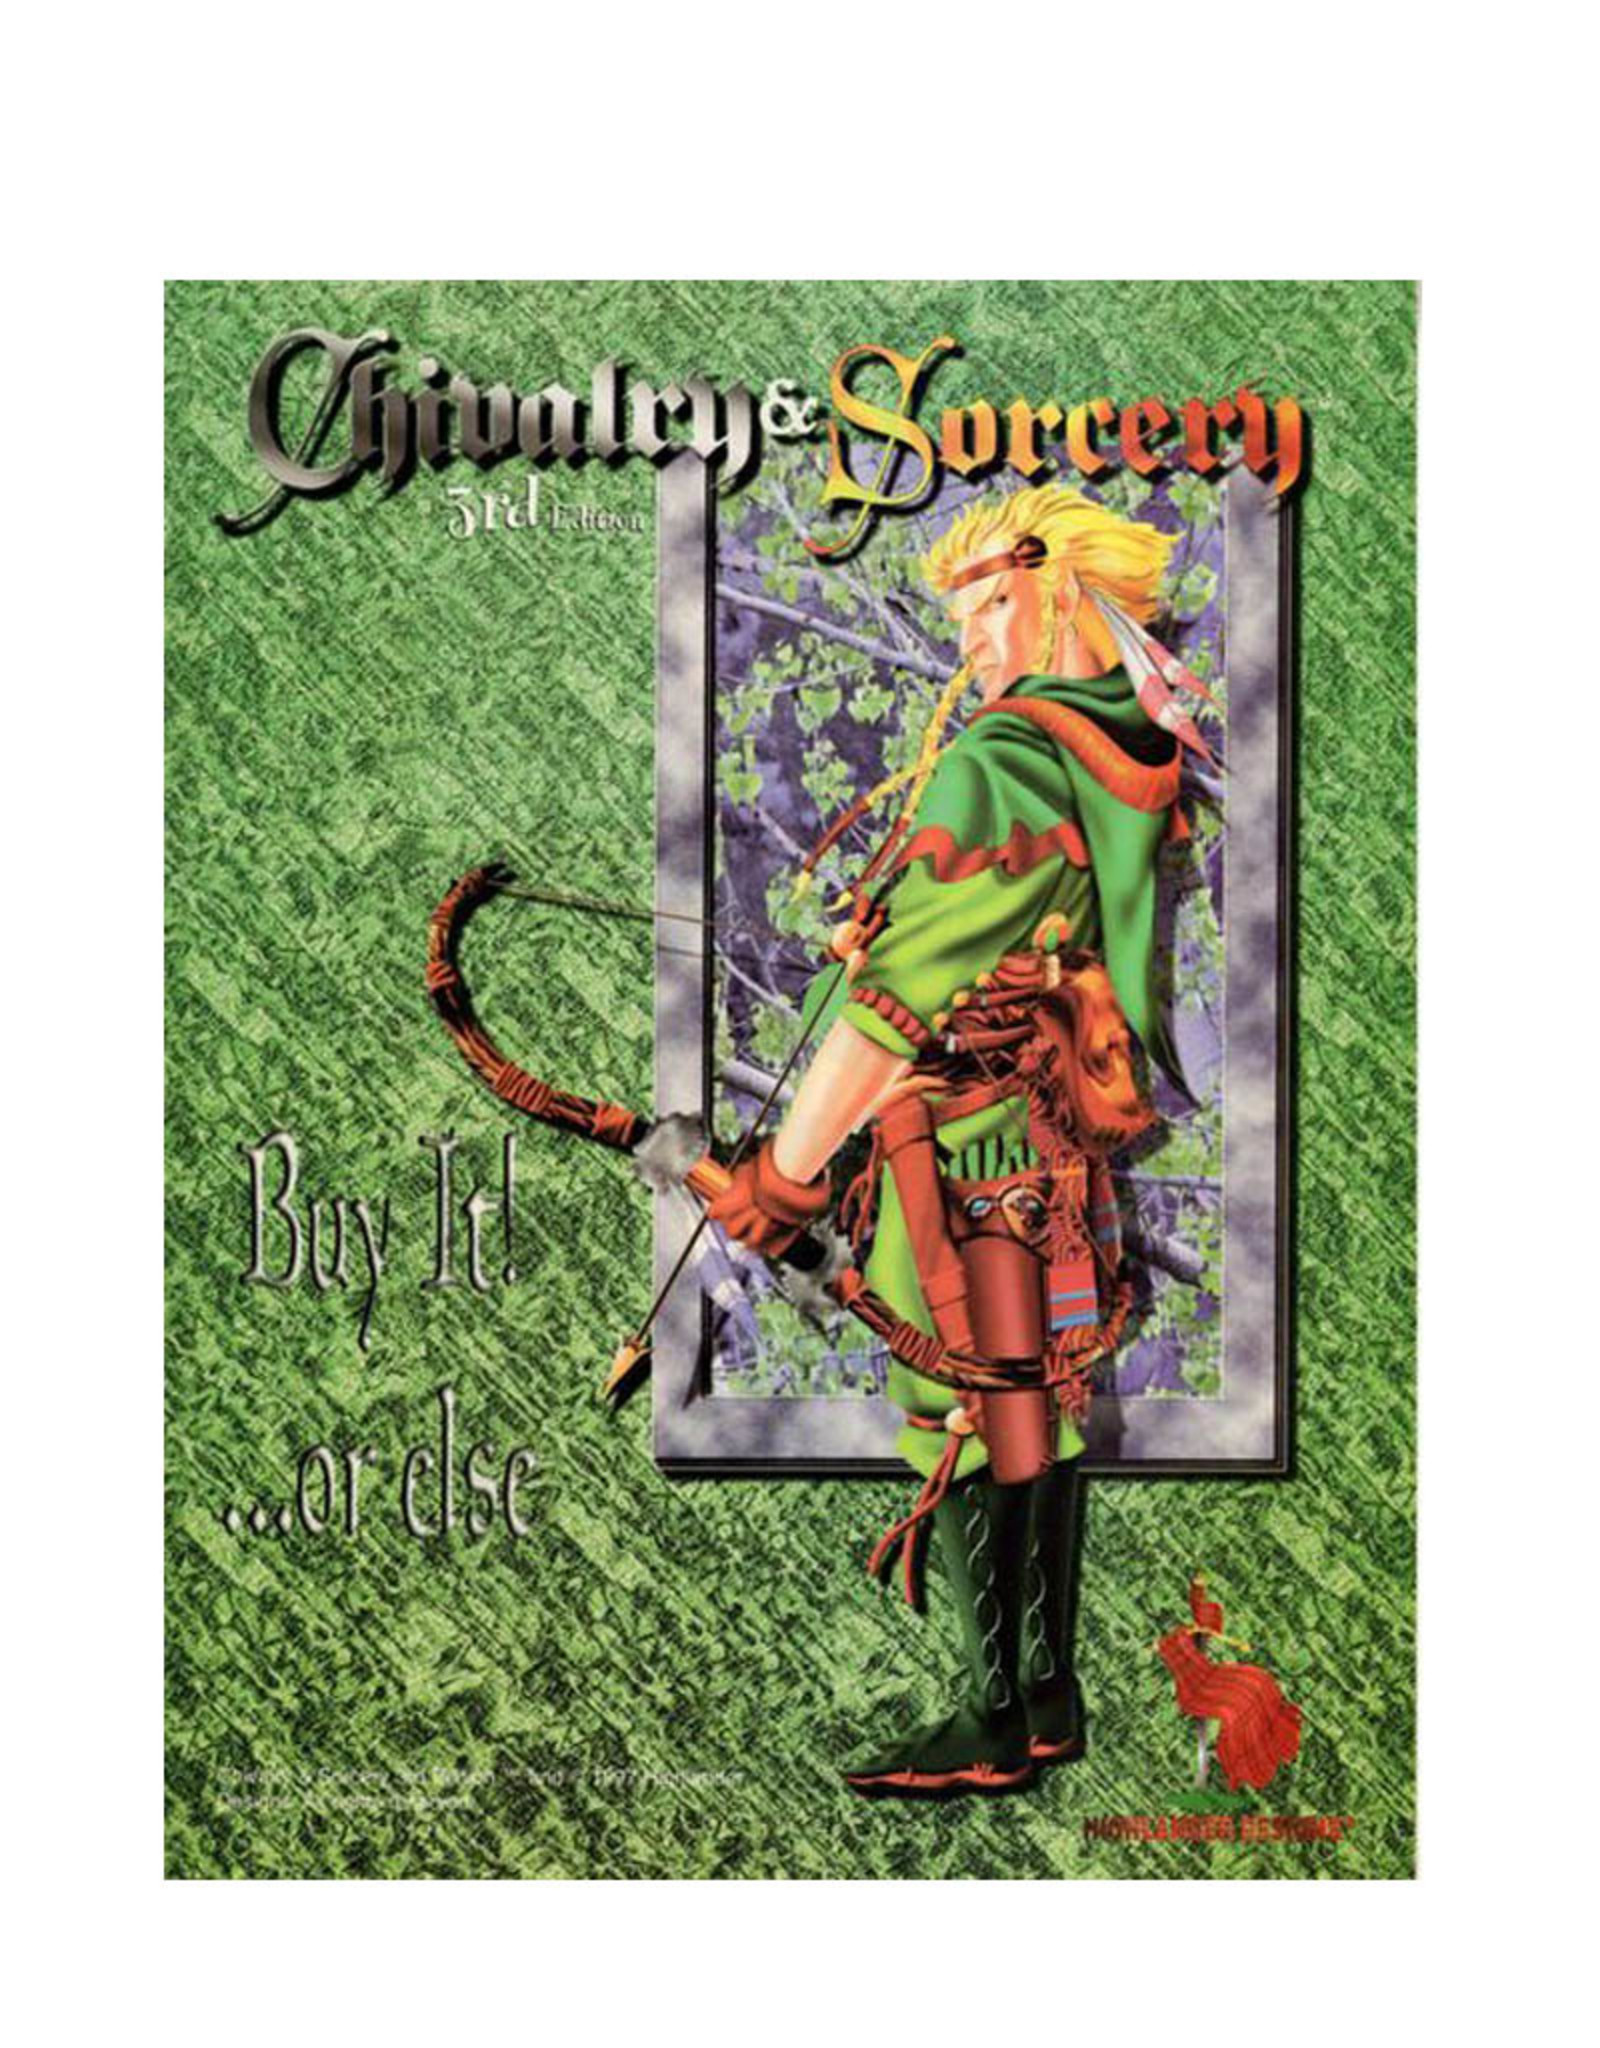 Highlander Designs Chivalry & Sorcery 3rd Edition